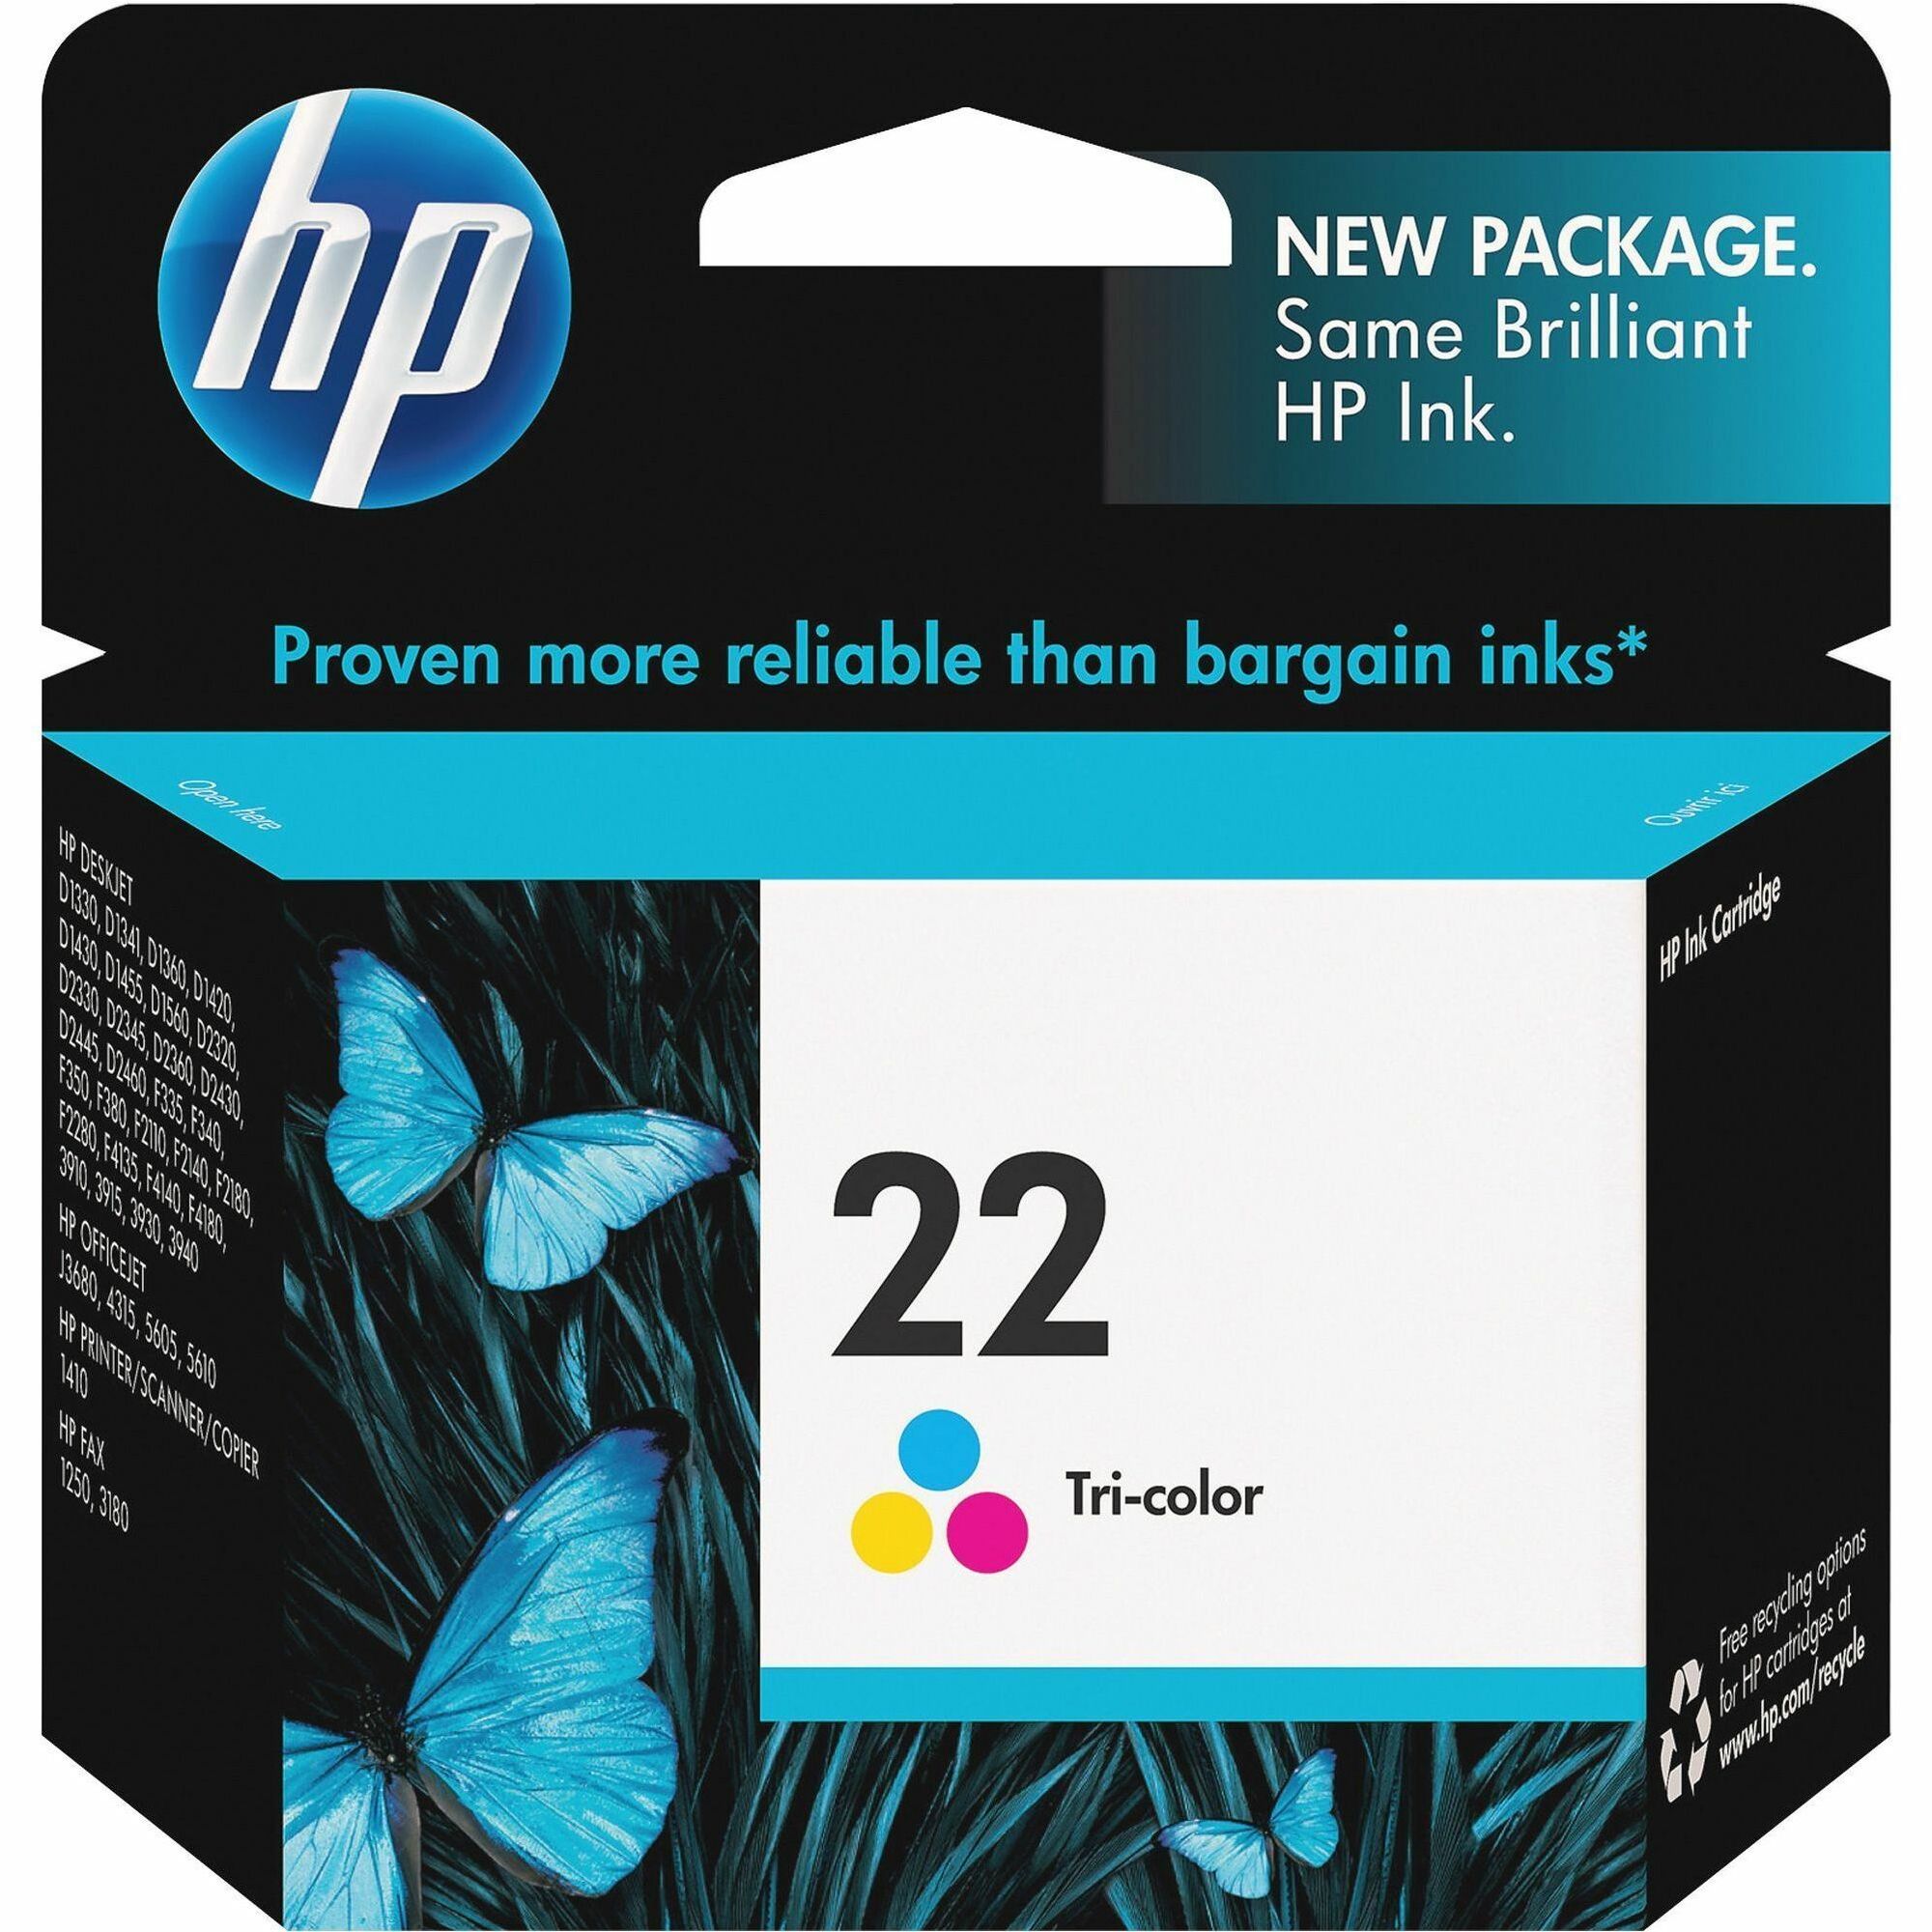 HP 32 lb. Laser Printer Paper